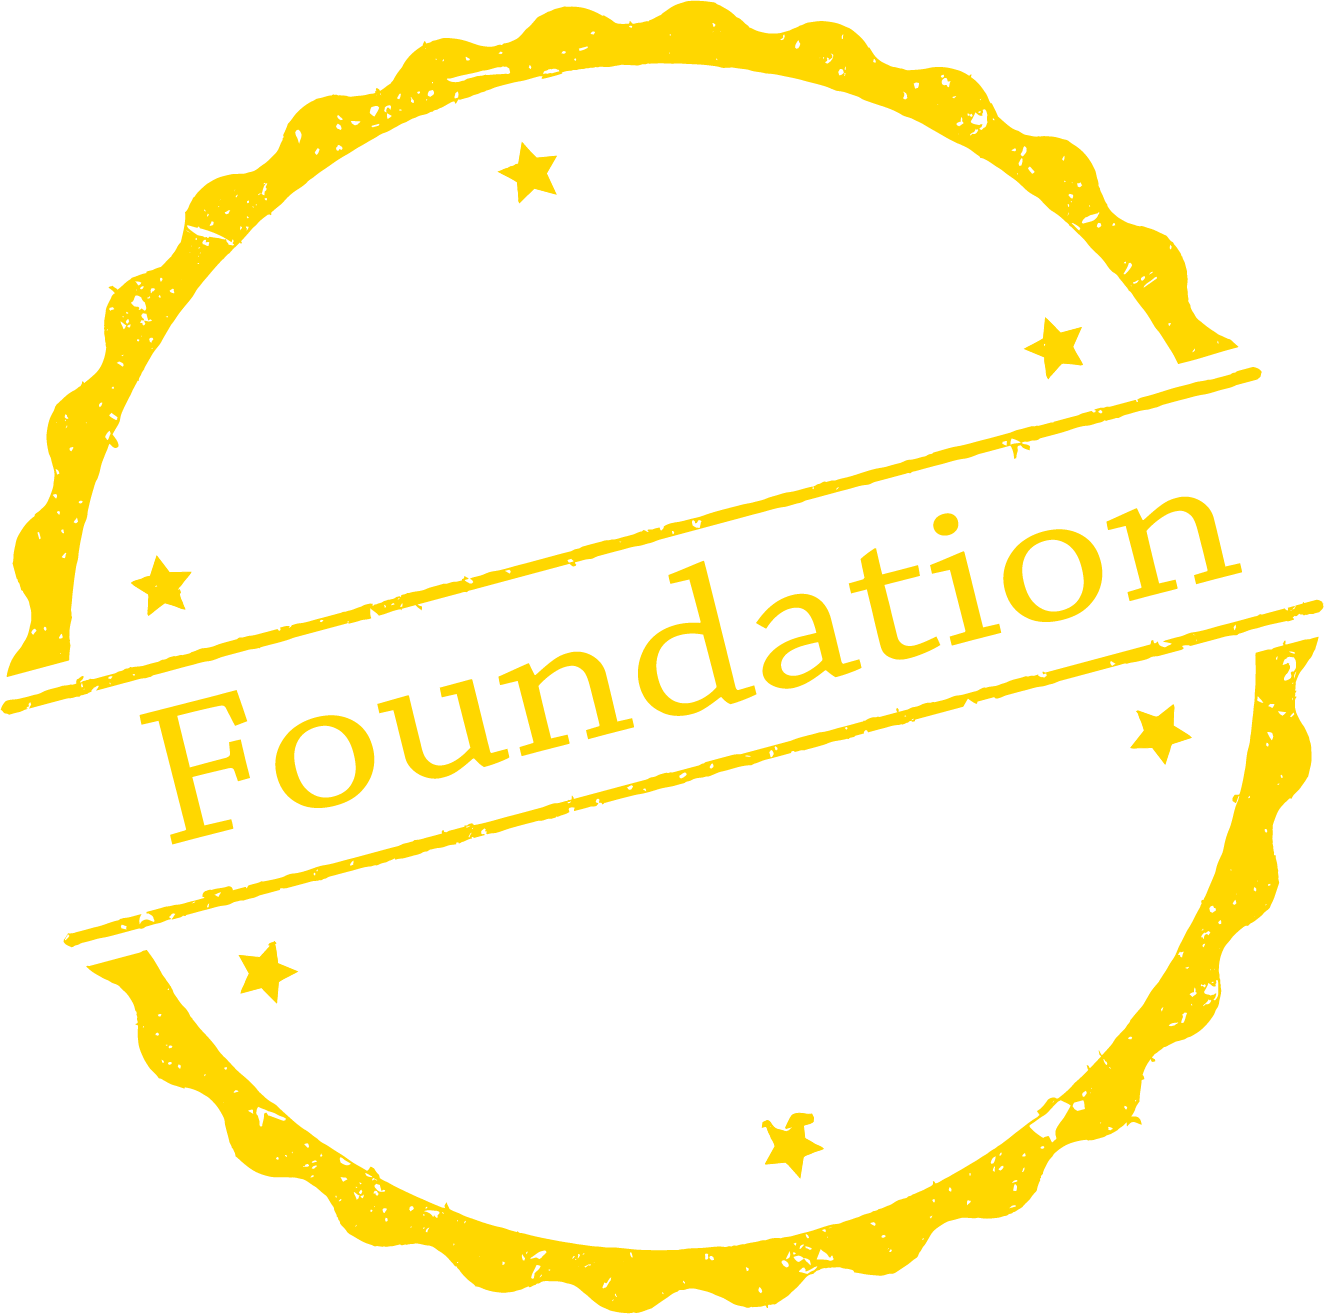 foundation sponsor art ccfm